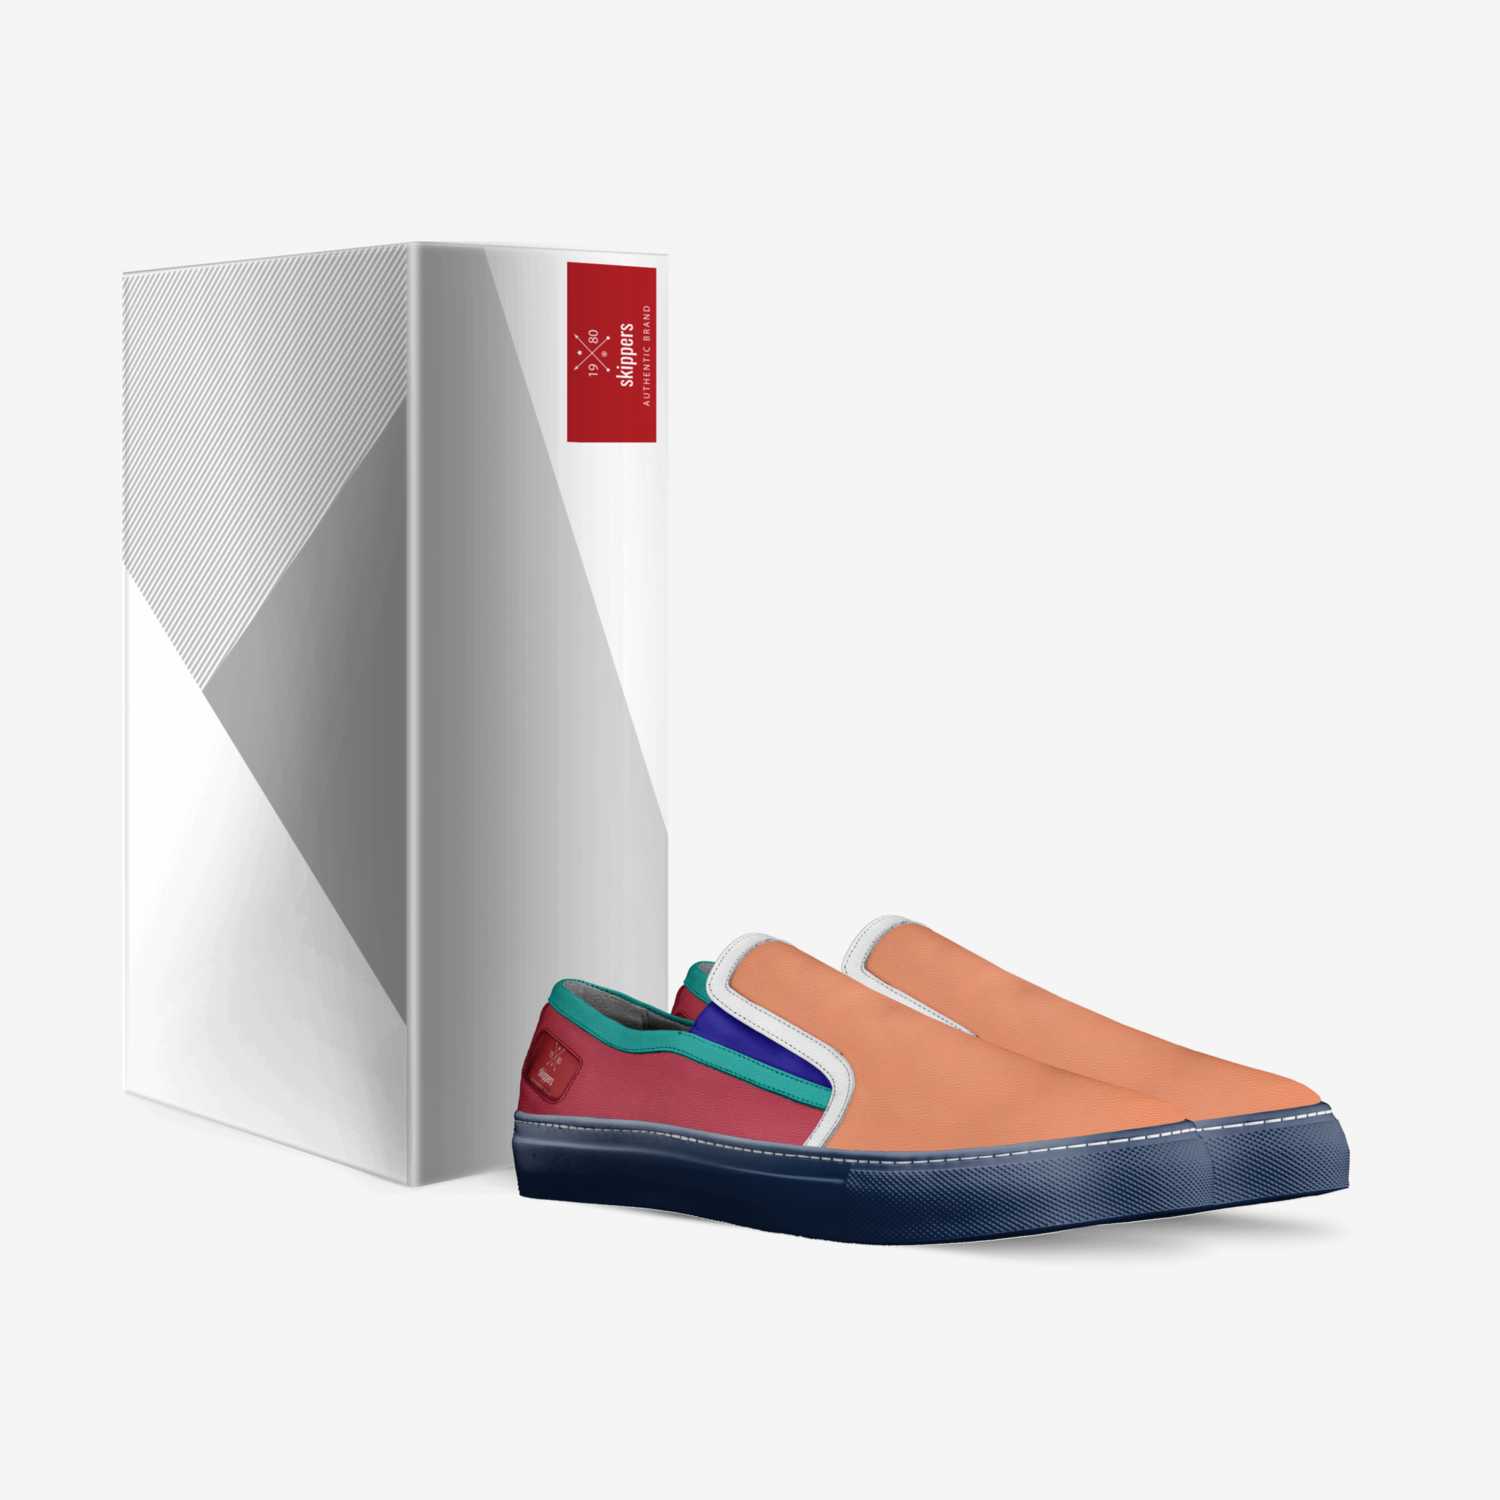 skippers custom made in Italy shoes by Deepak Agarwal | Box view